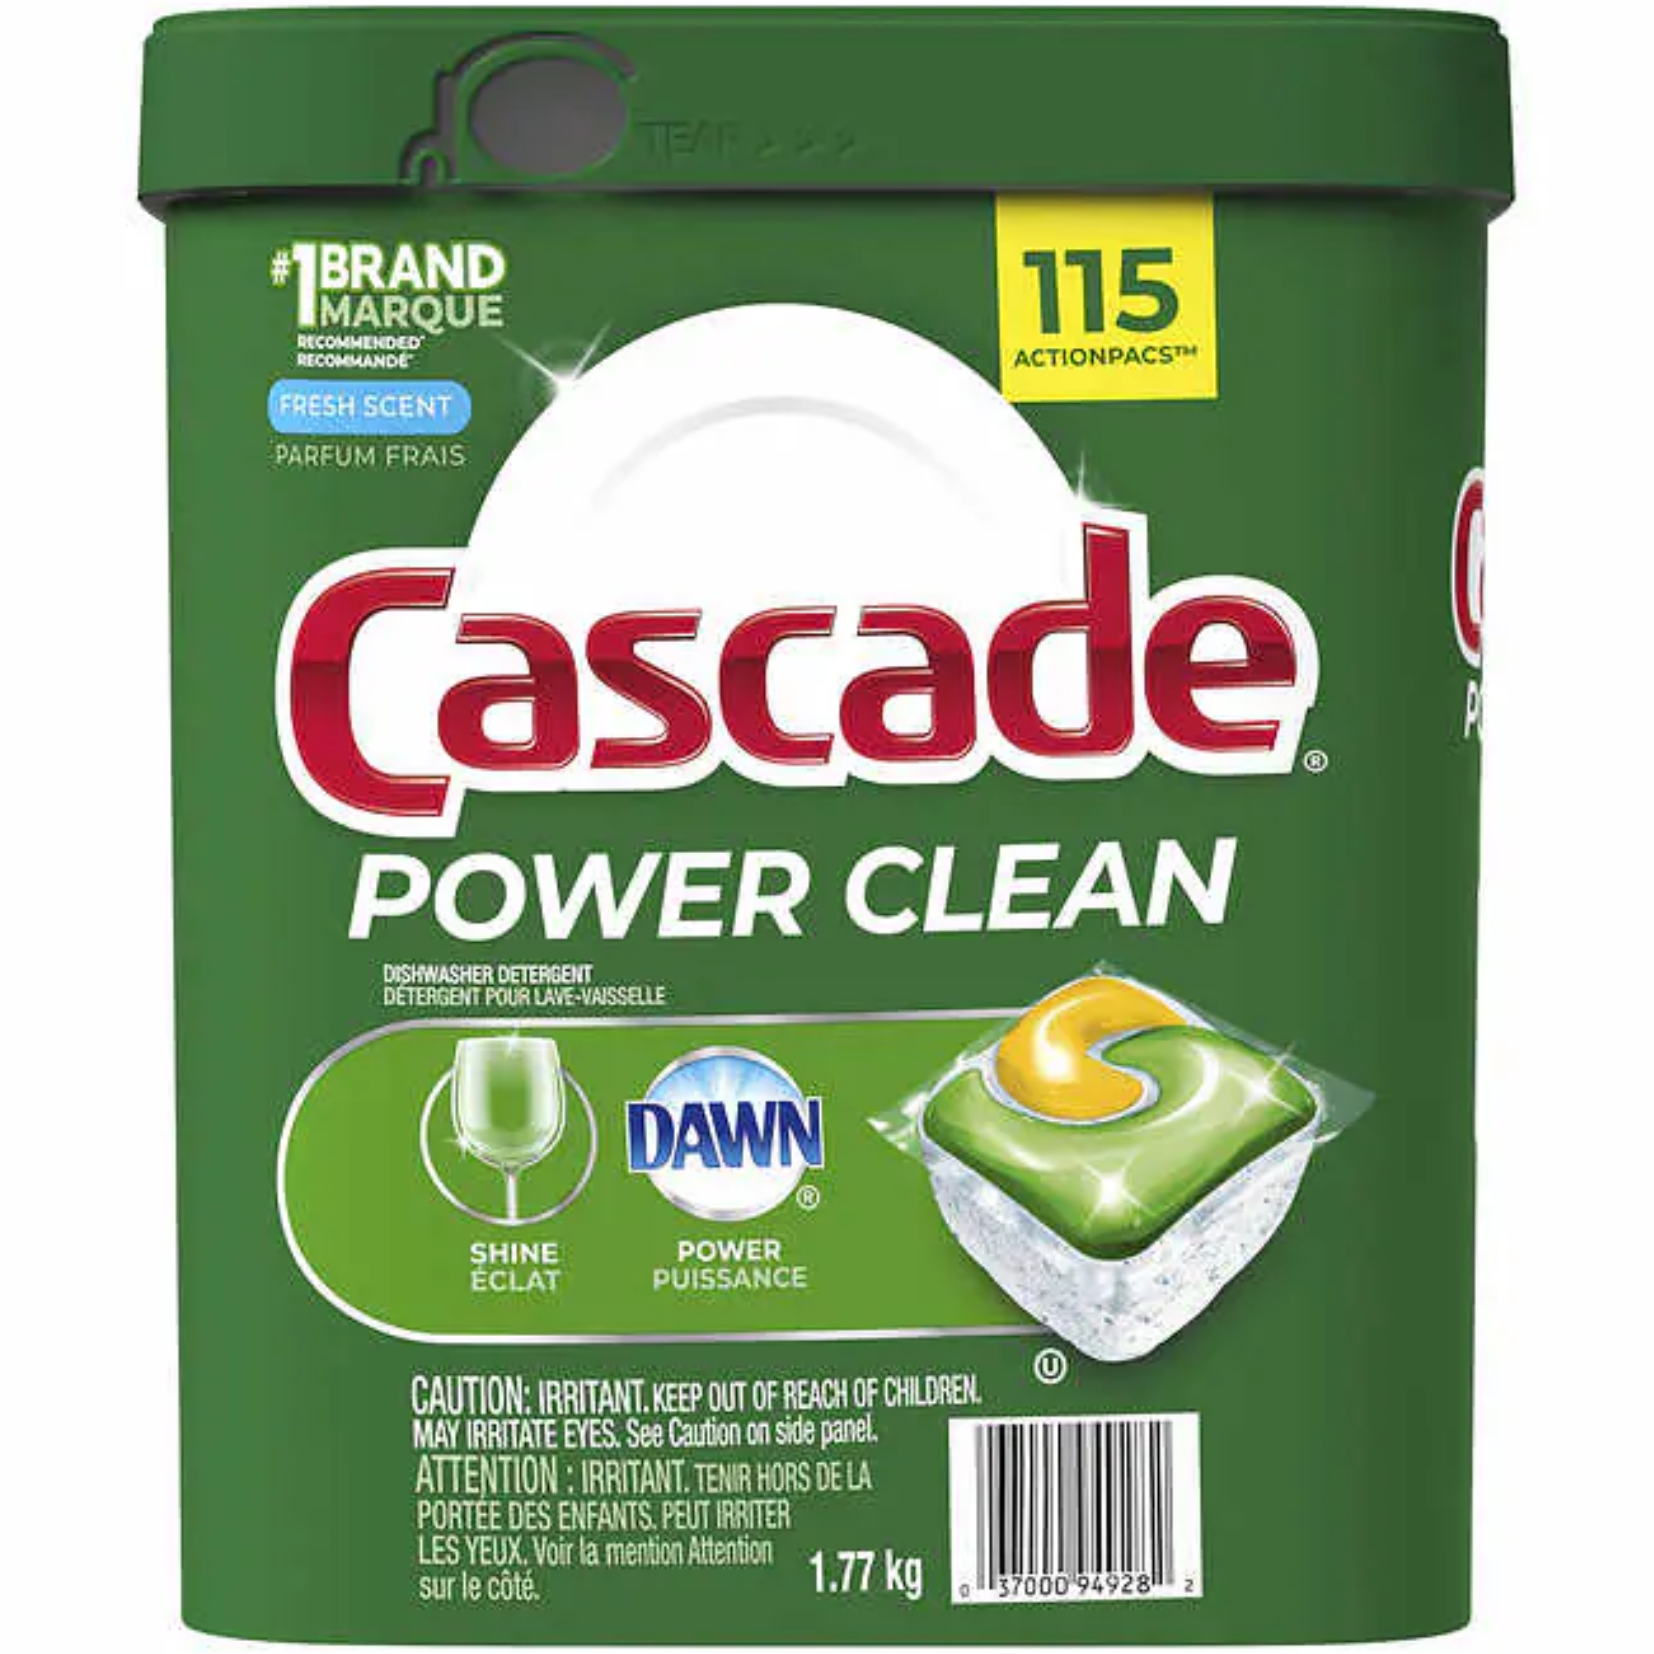 Cascade Power Clean Dishwasher Tabs 115ct